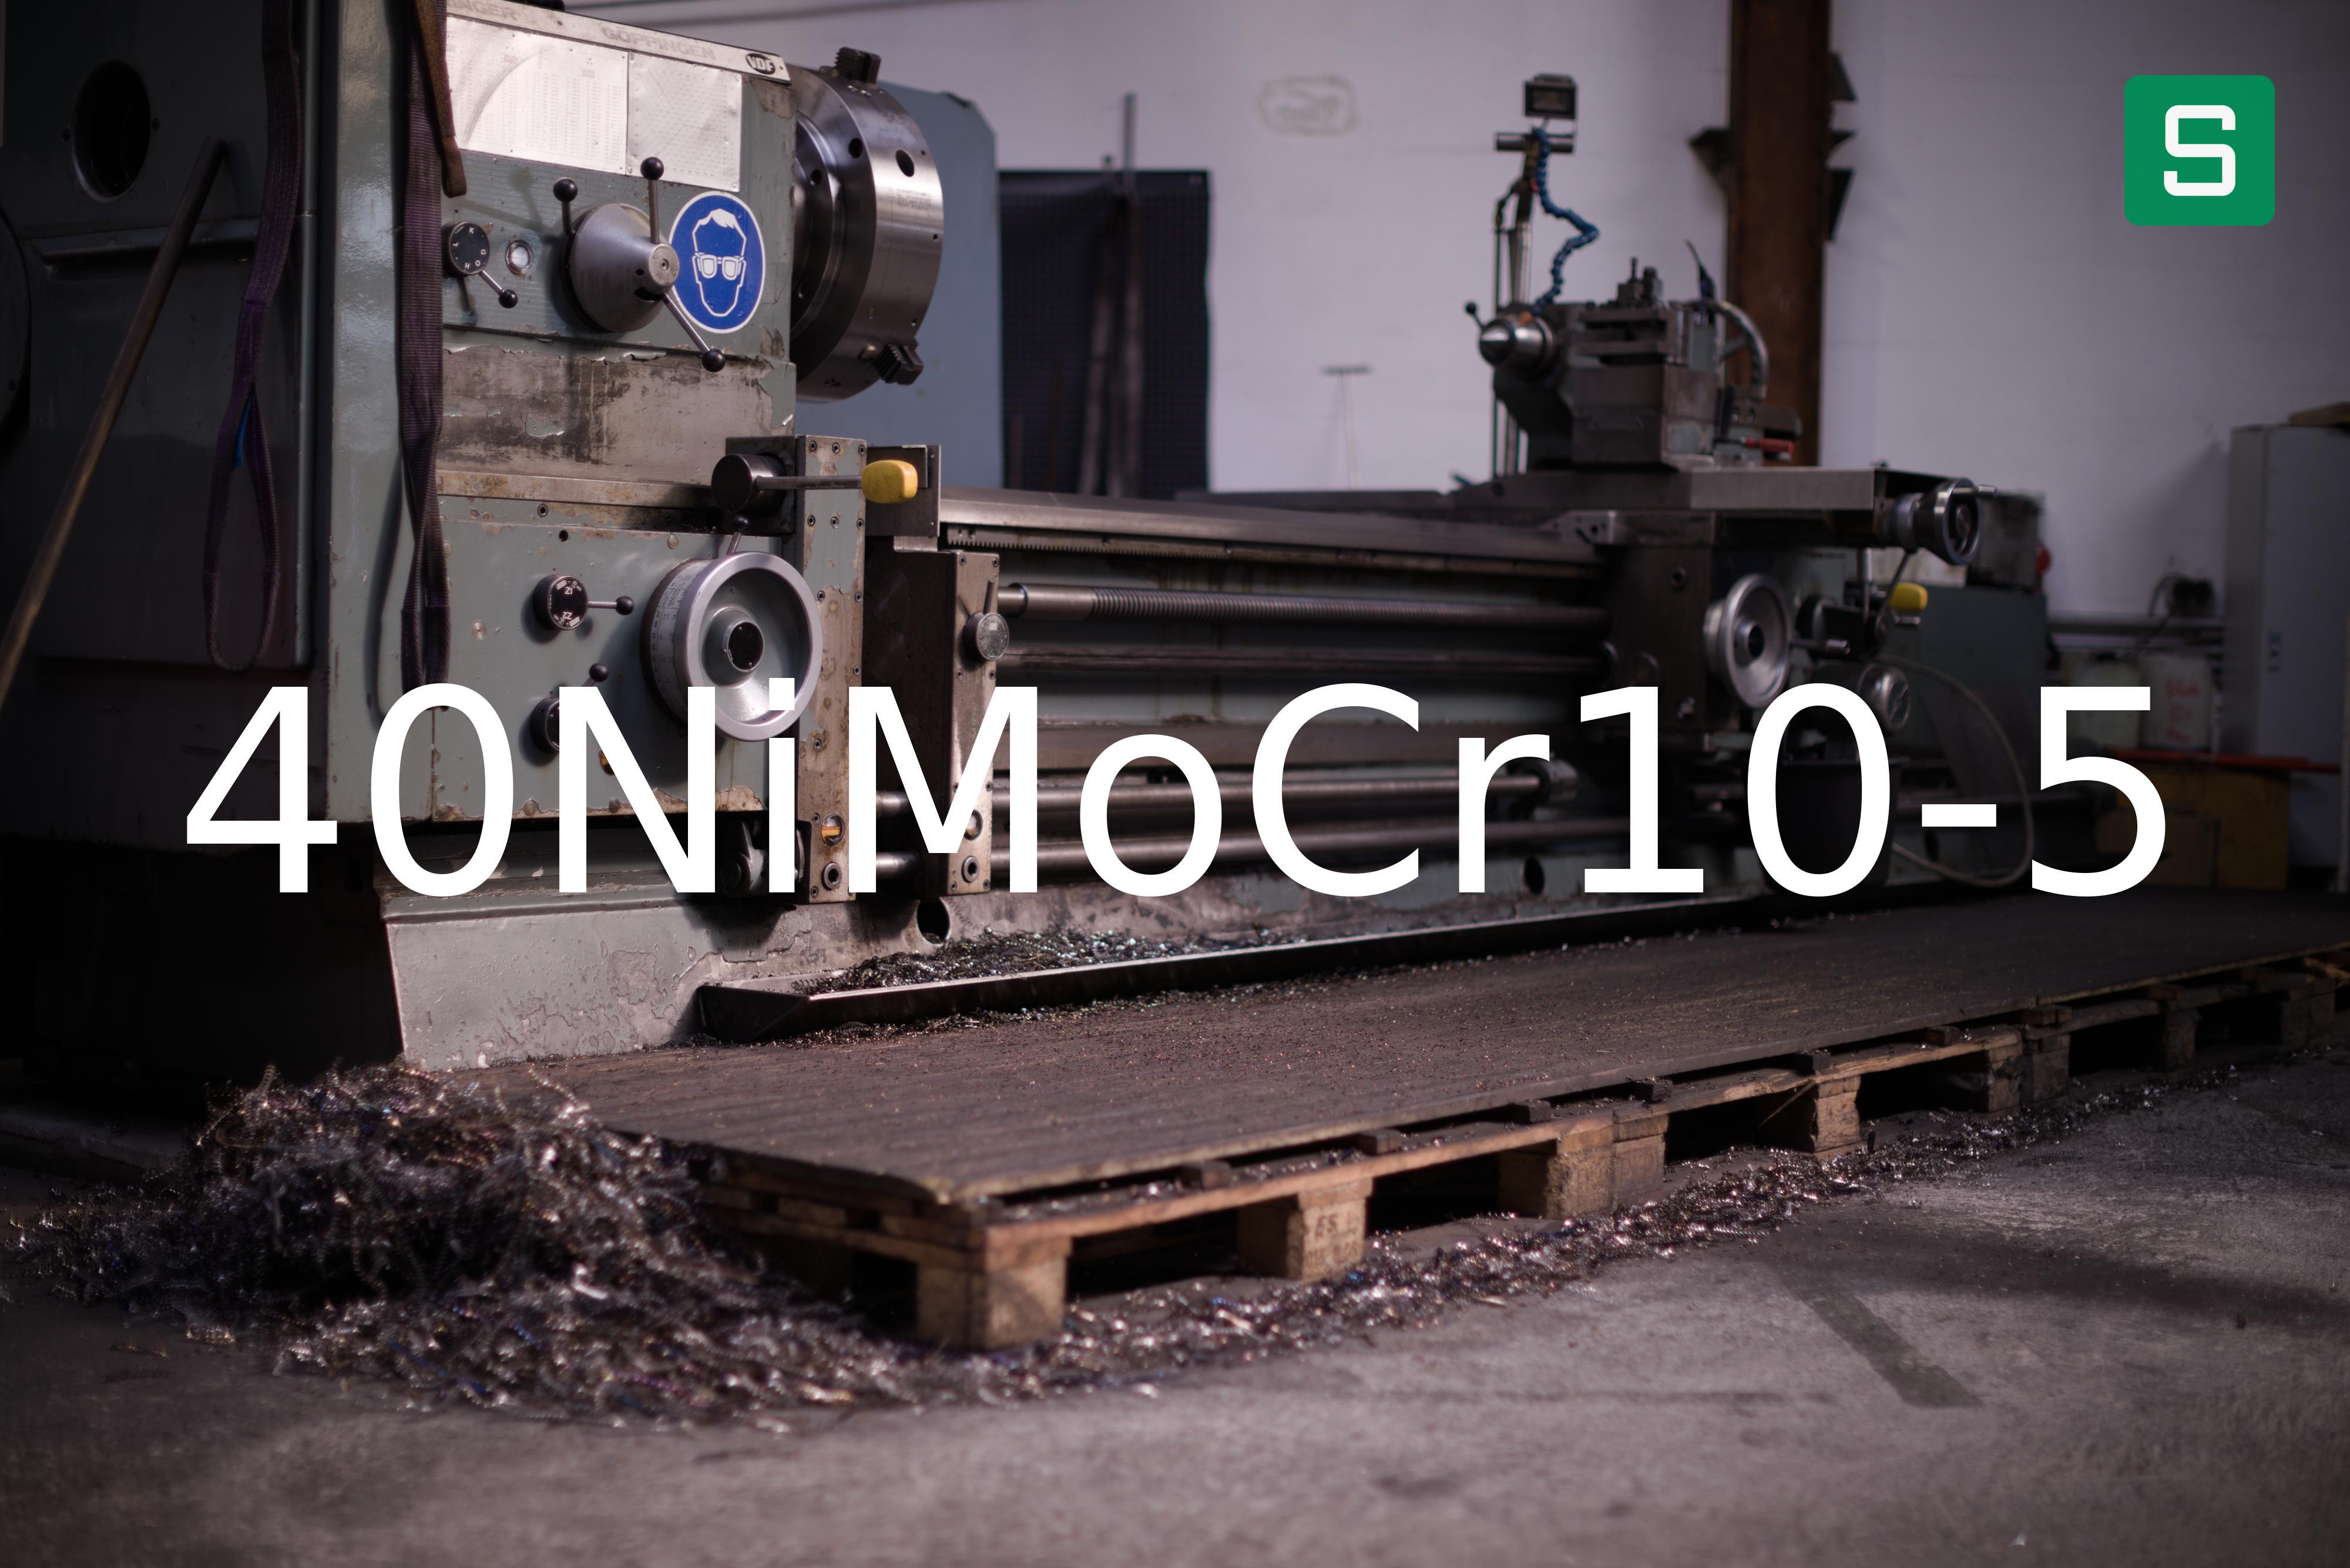 Steel Material: 40NiMoCr10-5